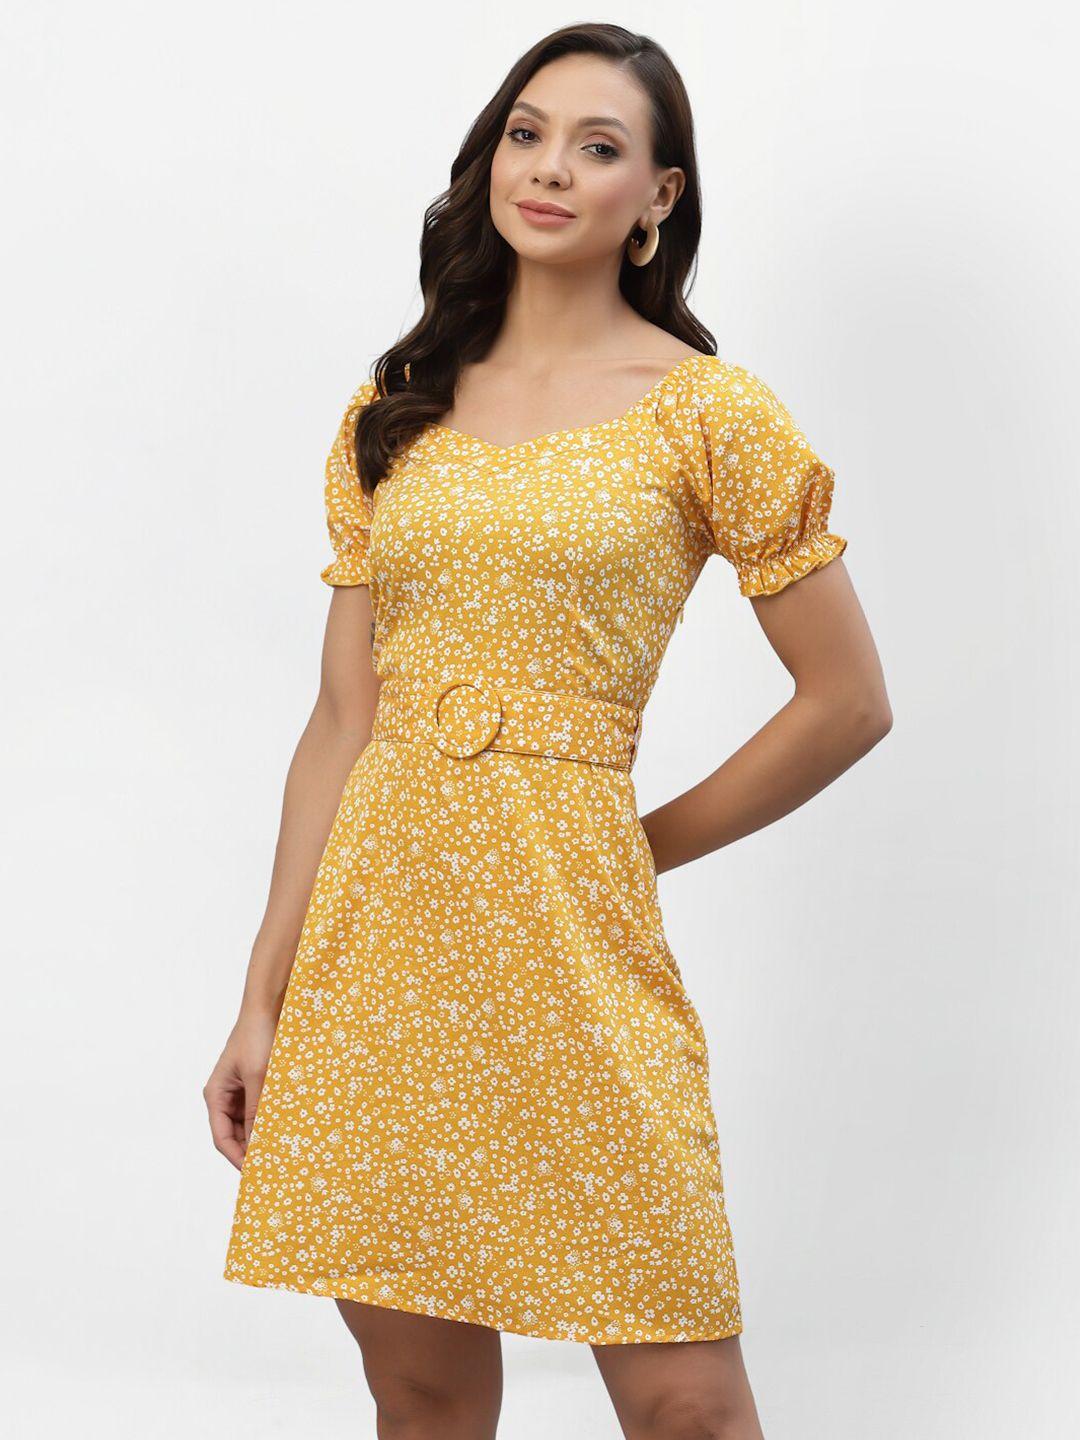 aayu women yellow floral crepe dress